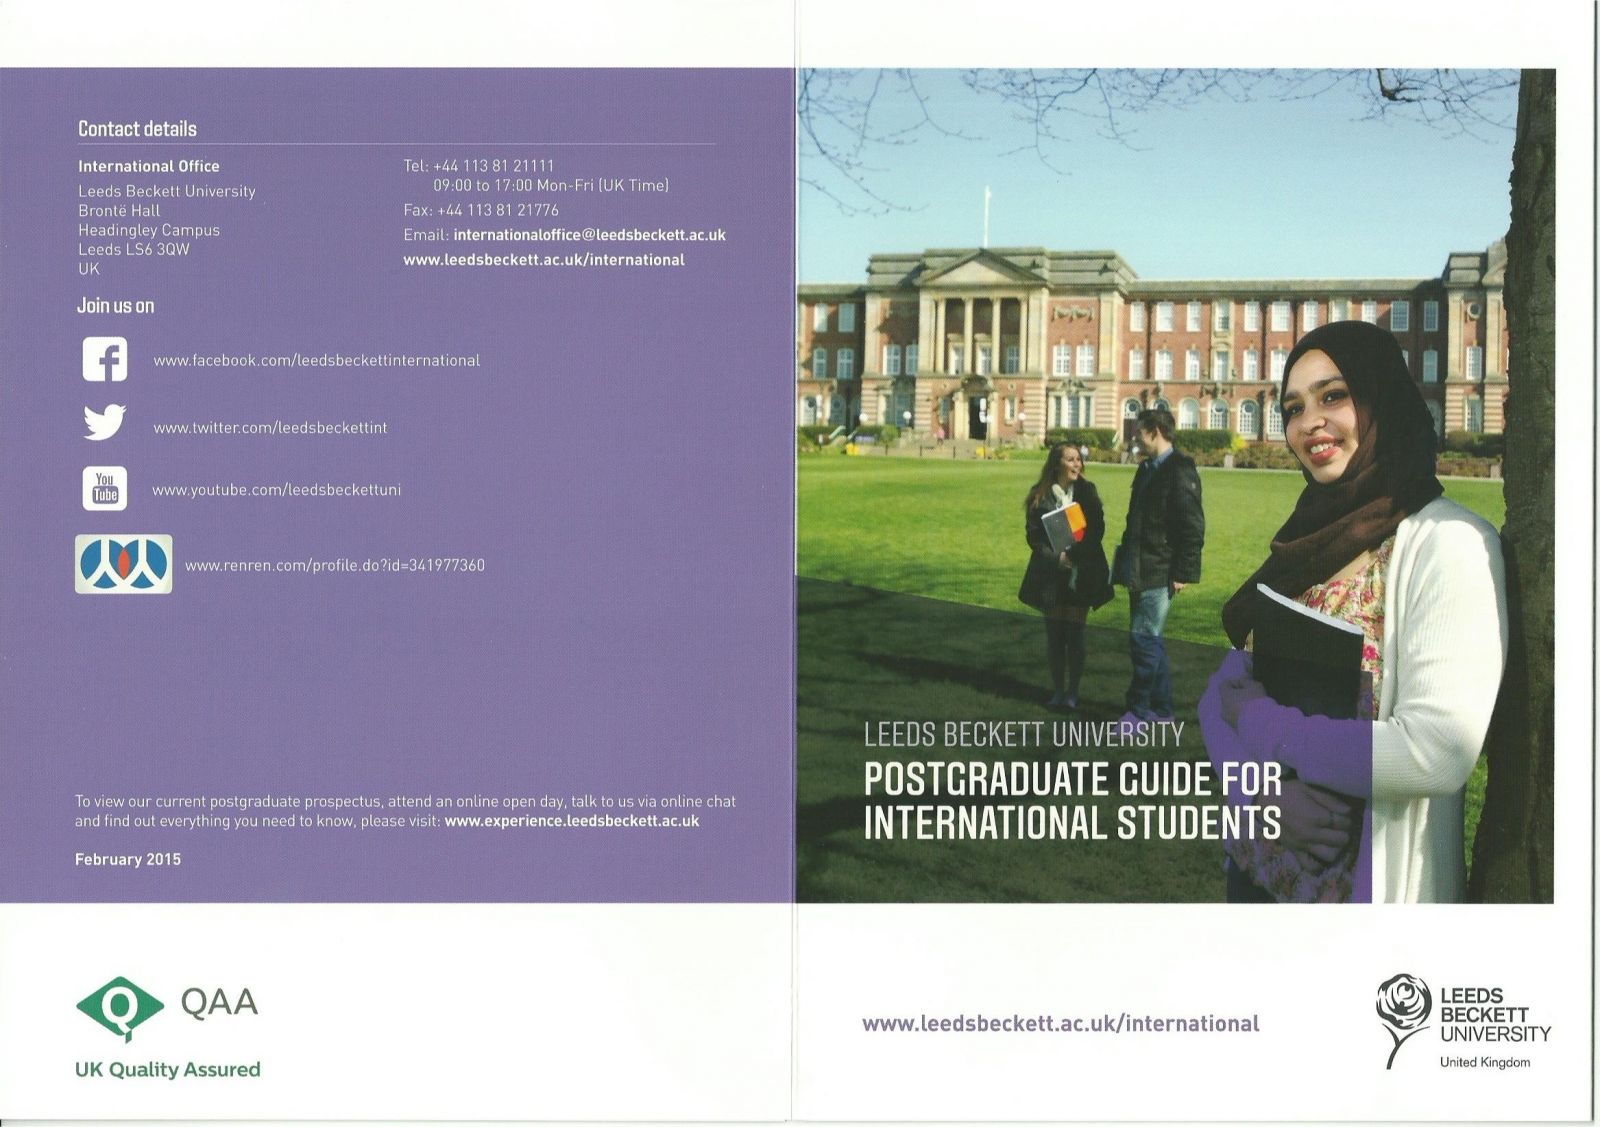 Postgraduate Guide for International Students at Leeds Beckett University, England 2016.